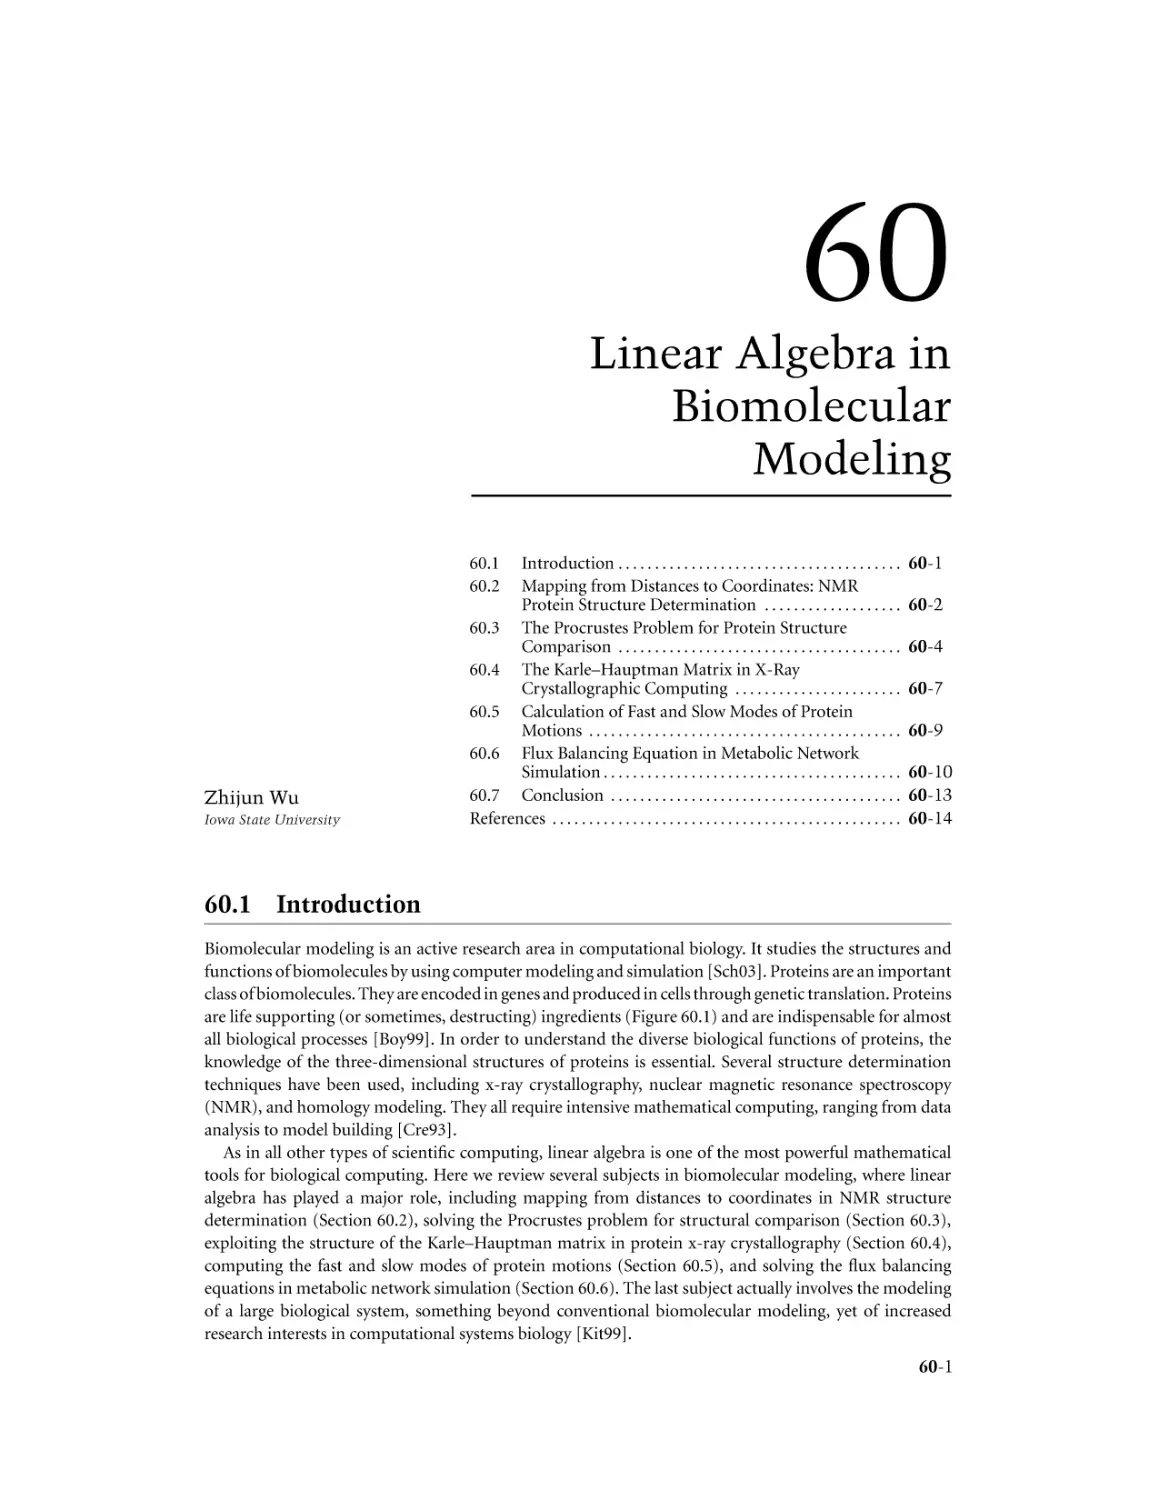 Chapter 60. Linear Algebra in Biomolecular Modeling